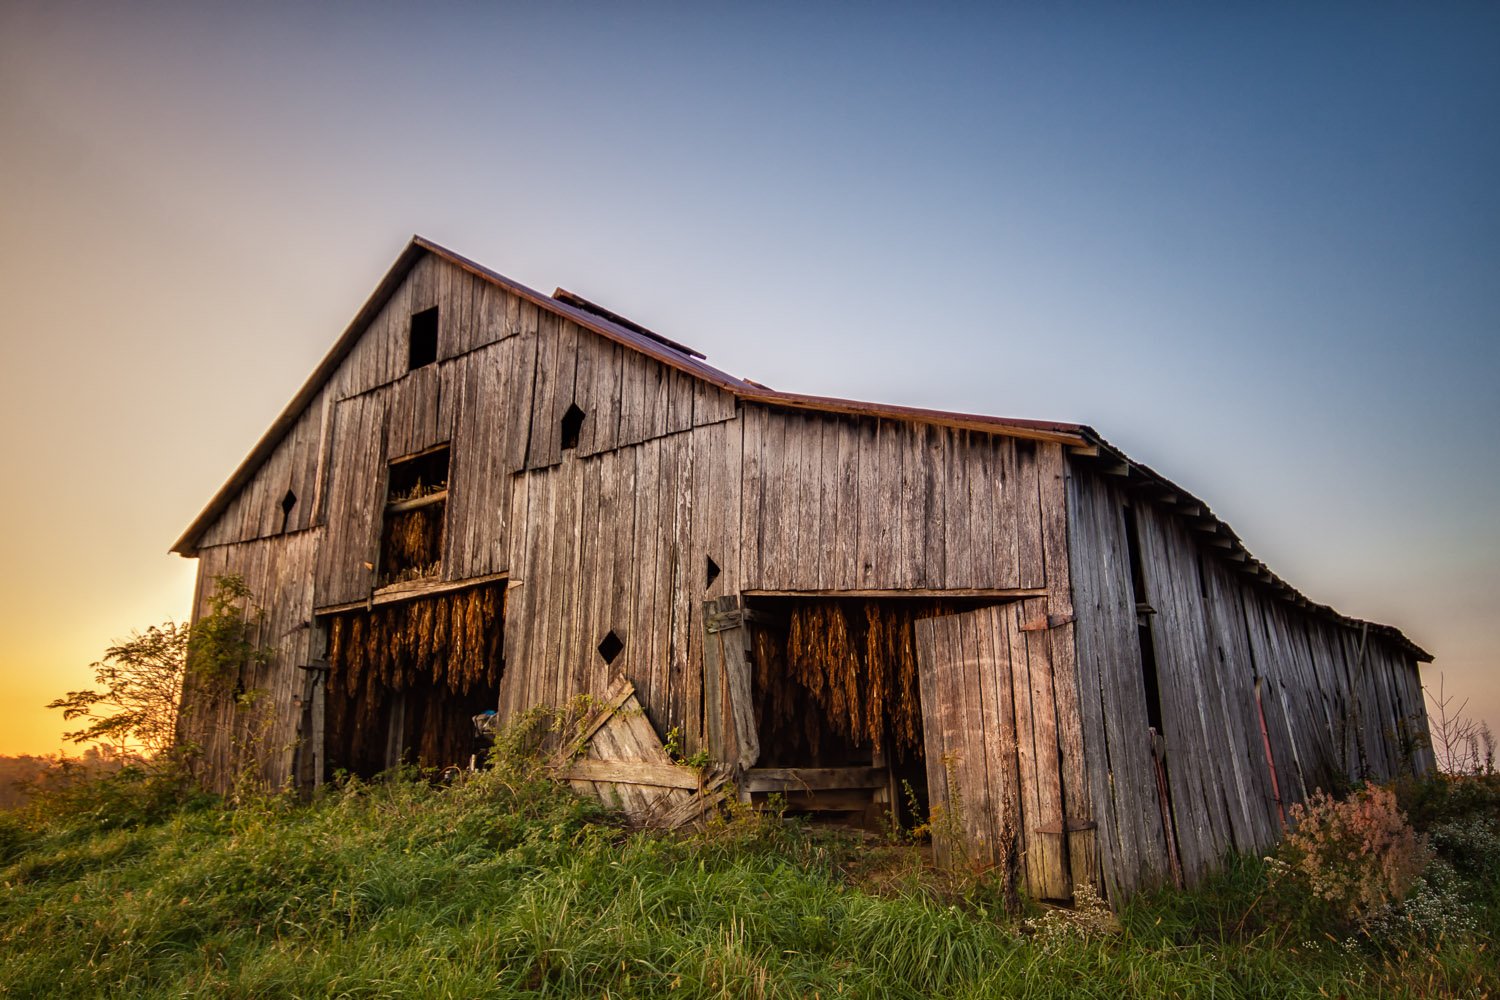 The Old Barn_Kentucky_USA.jpg